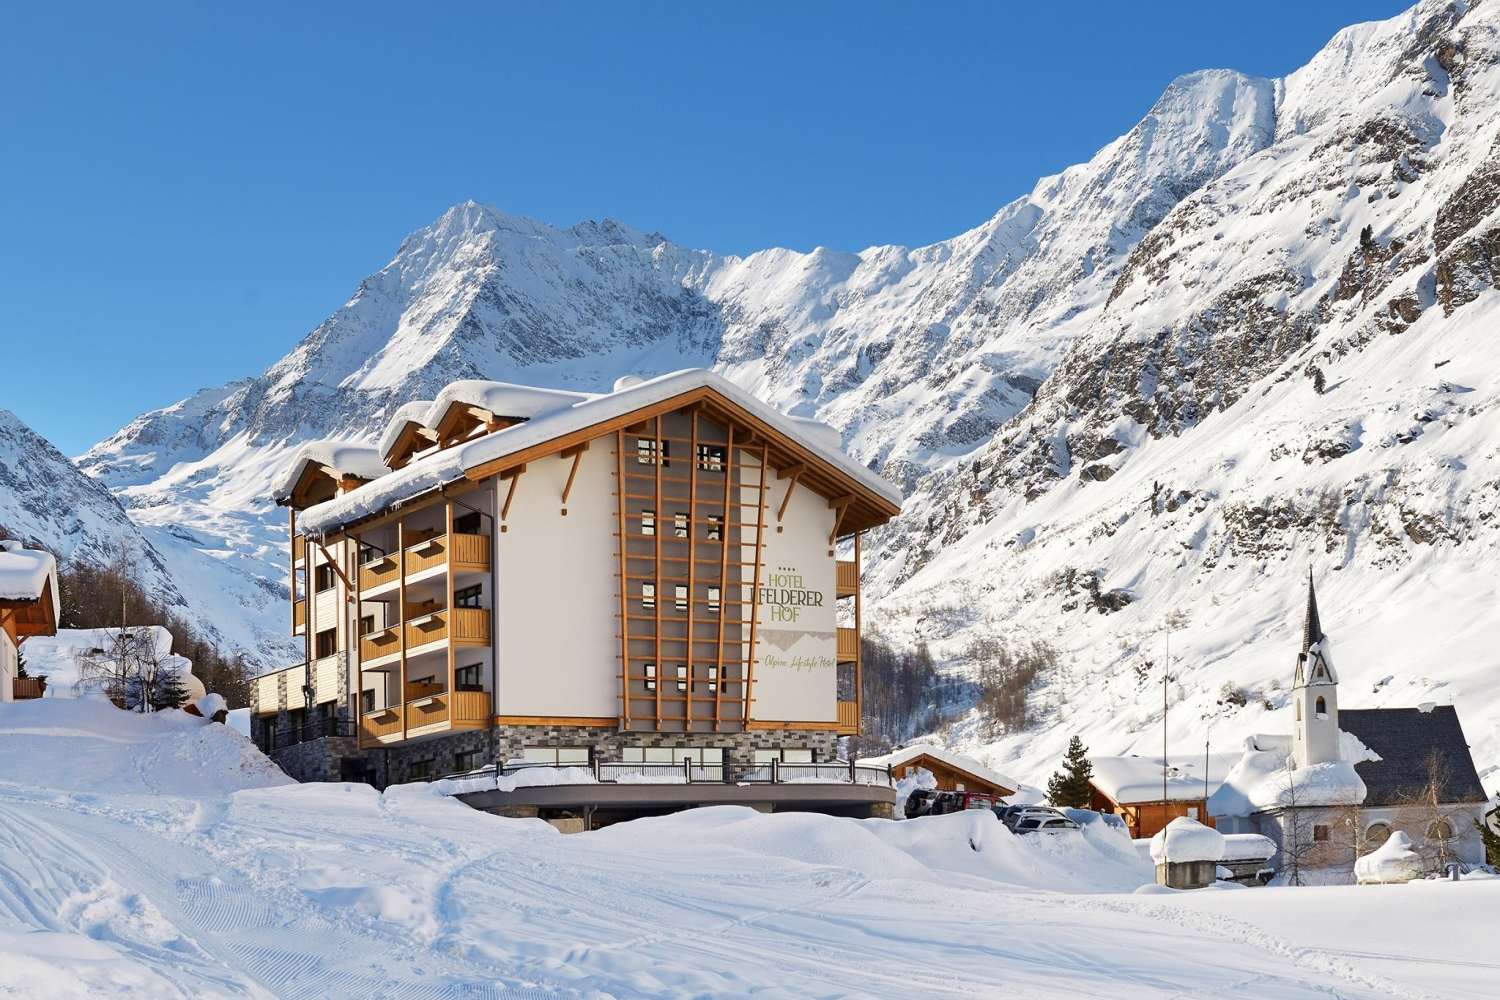 Pfeldererhof Alpine Lifestyle, South Tyrol - Italy